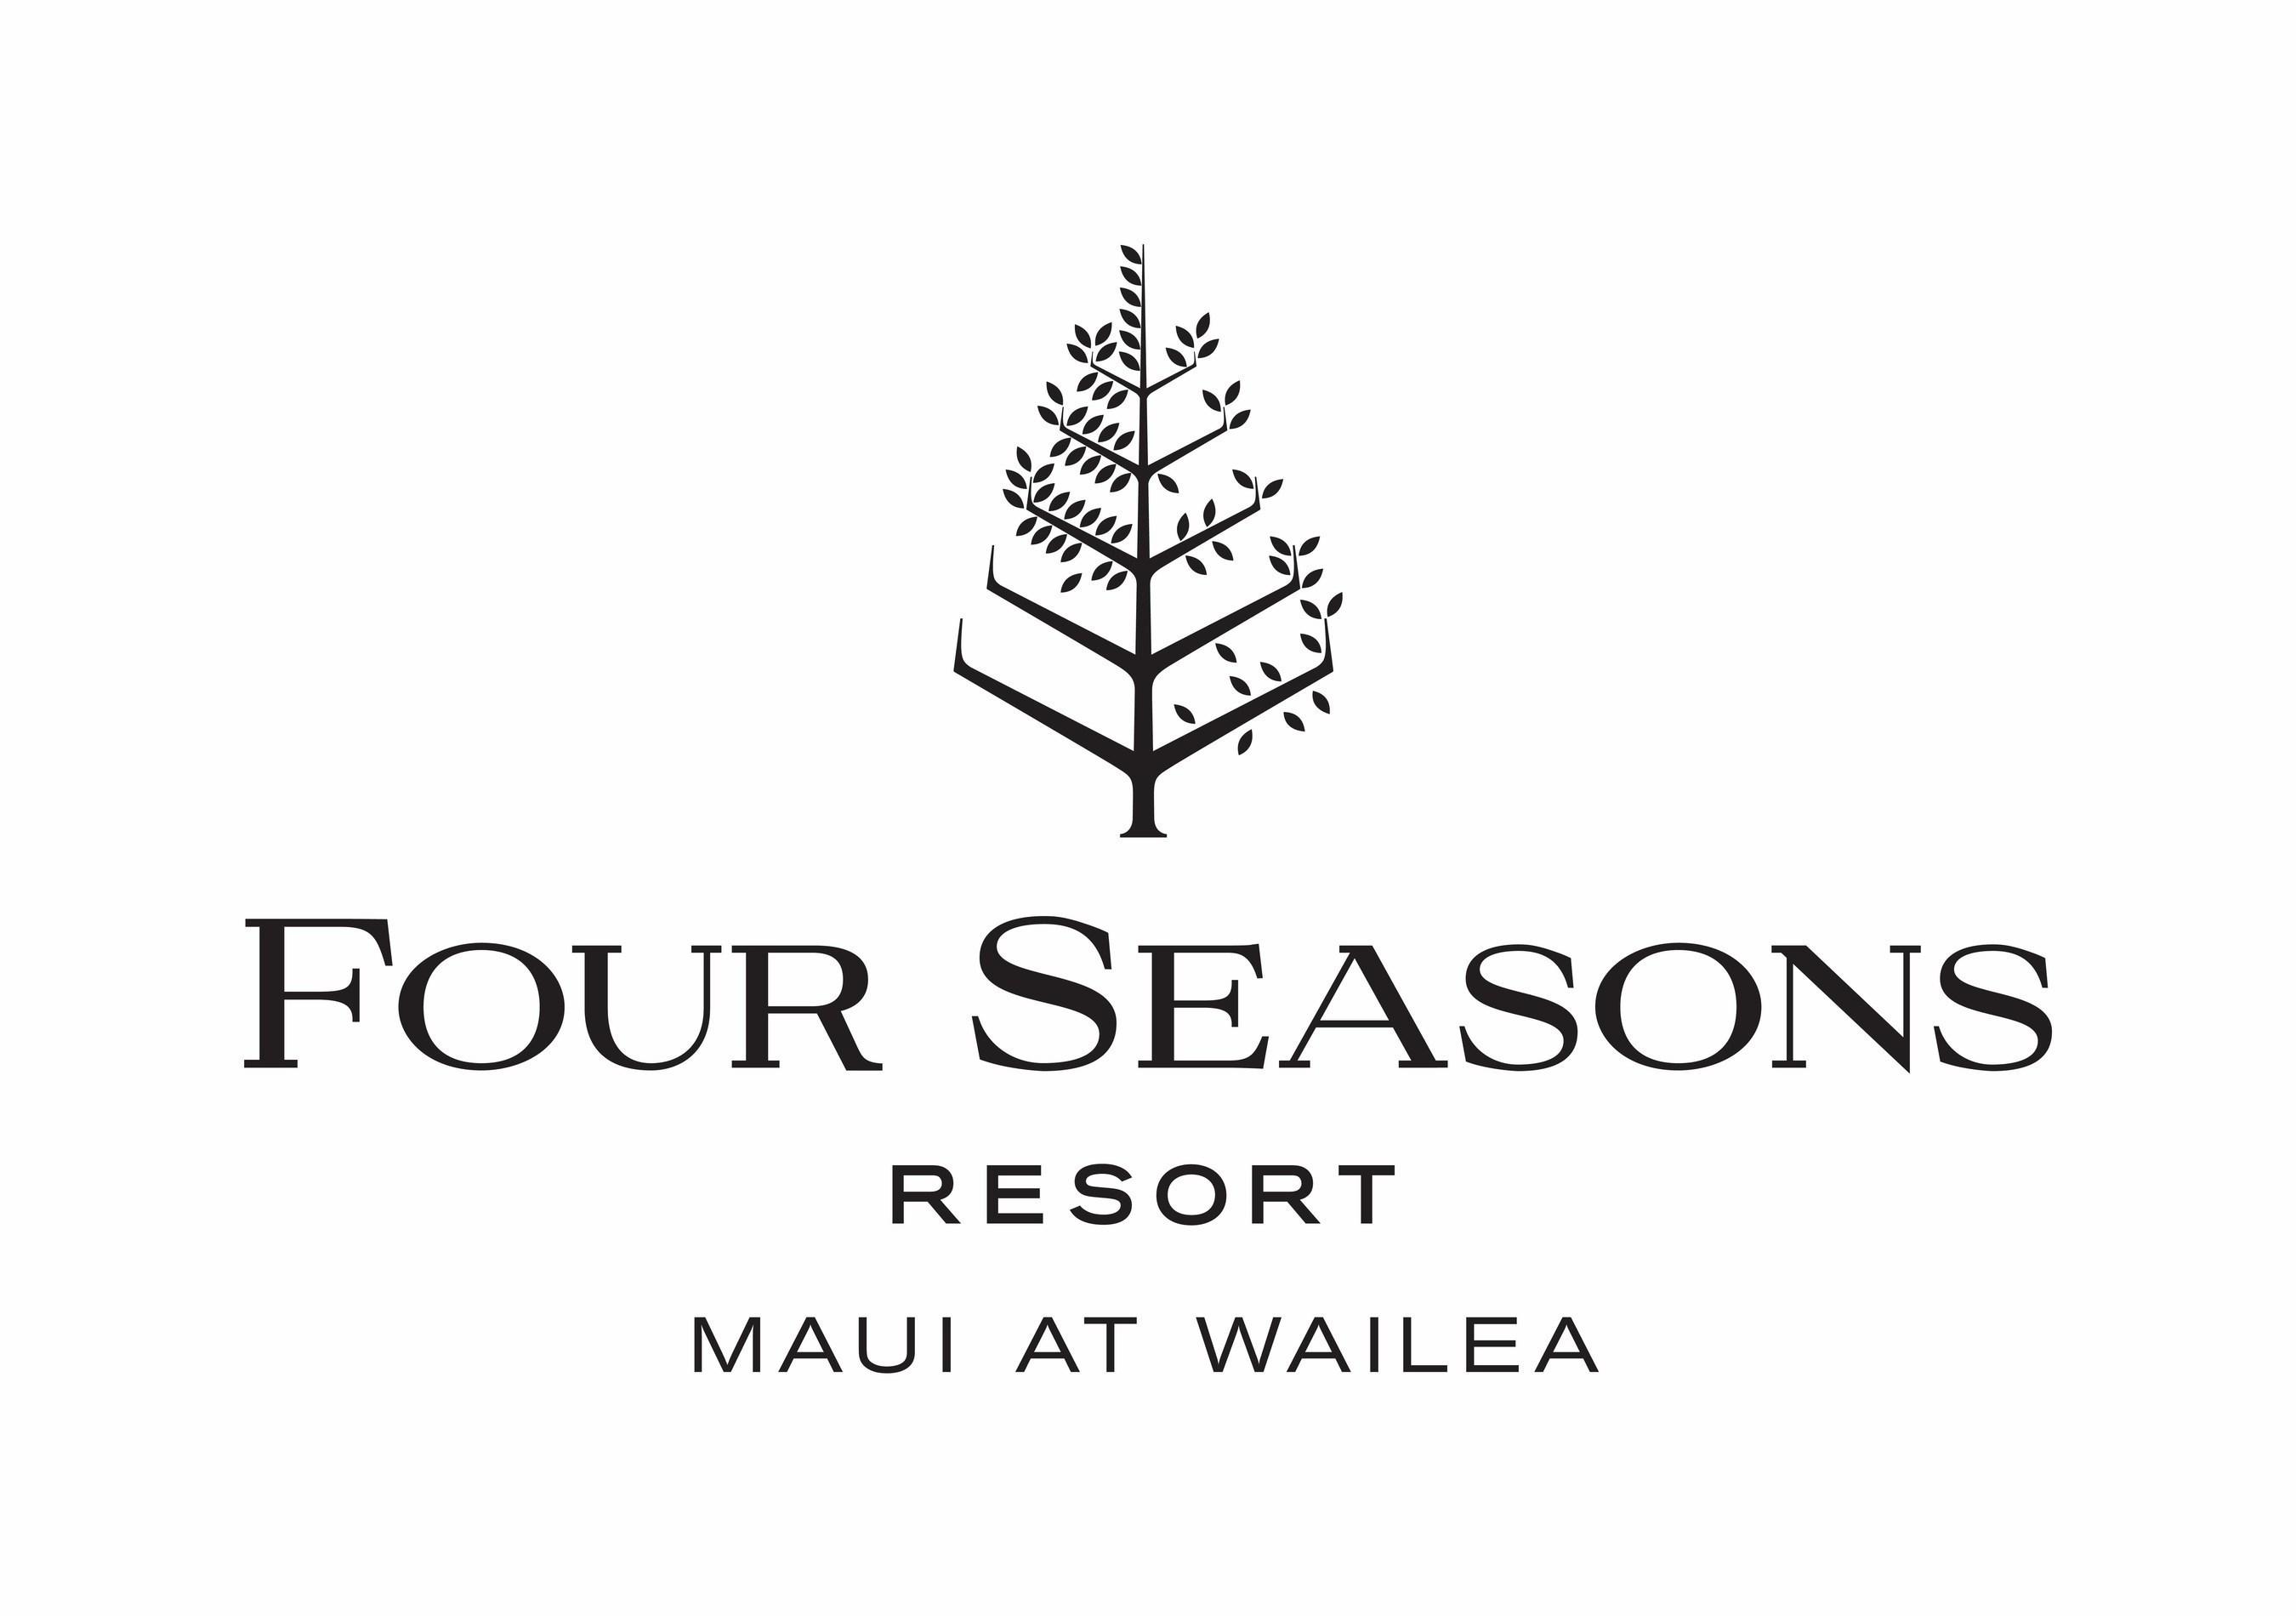 Four Seasons Logo - Four Seasons Resort Maui Logo. DocEmerson. Lifestyle Medicine